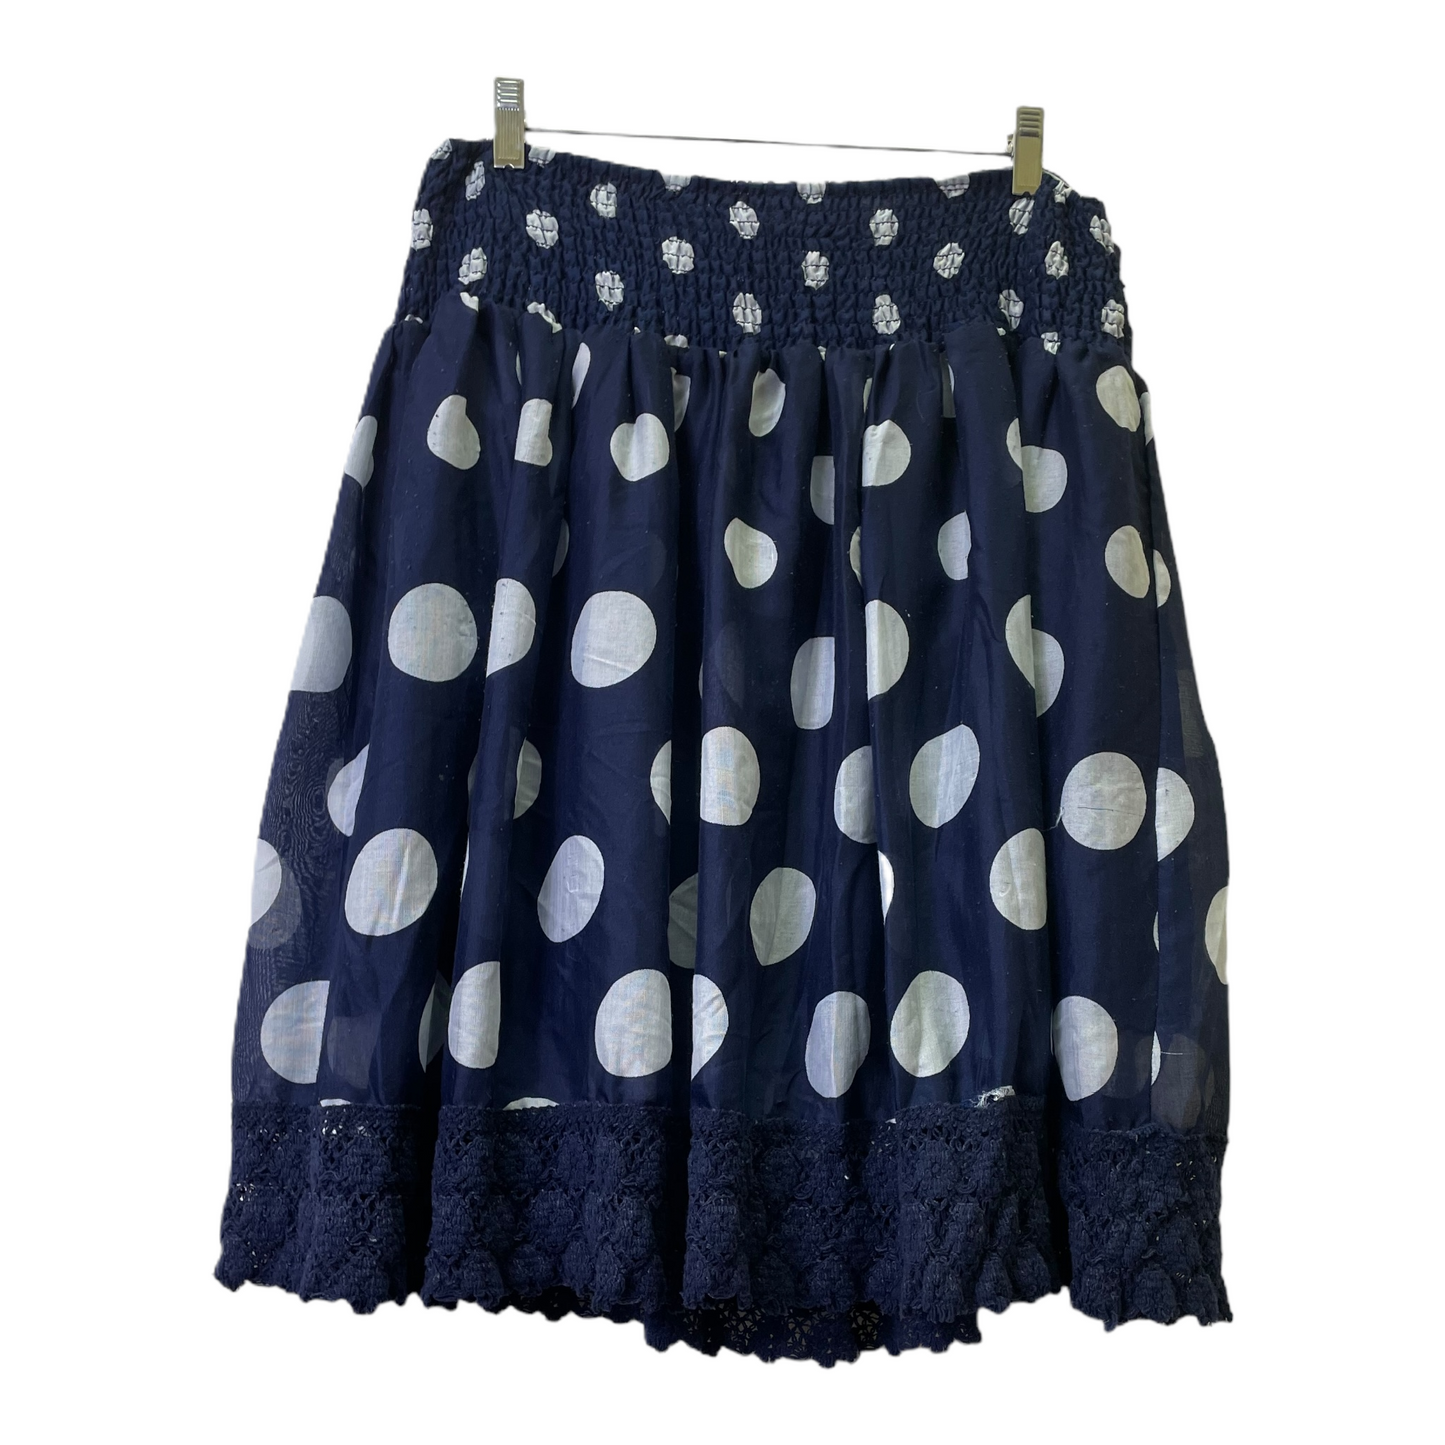 Polkadot Skirt Designer By MIX NOUVEAU Size: Xl